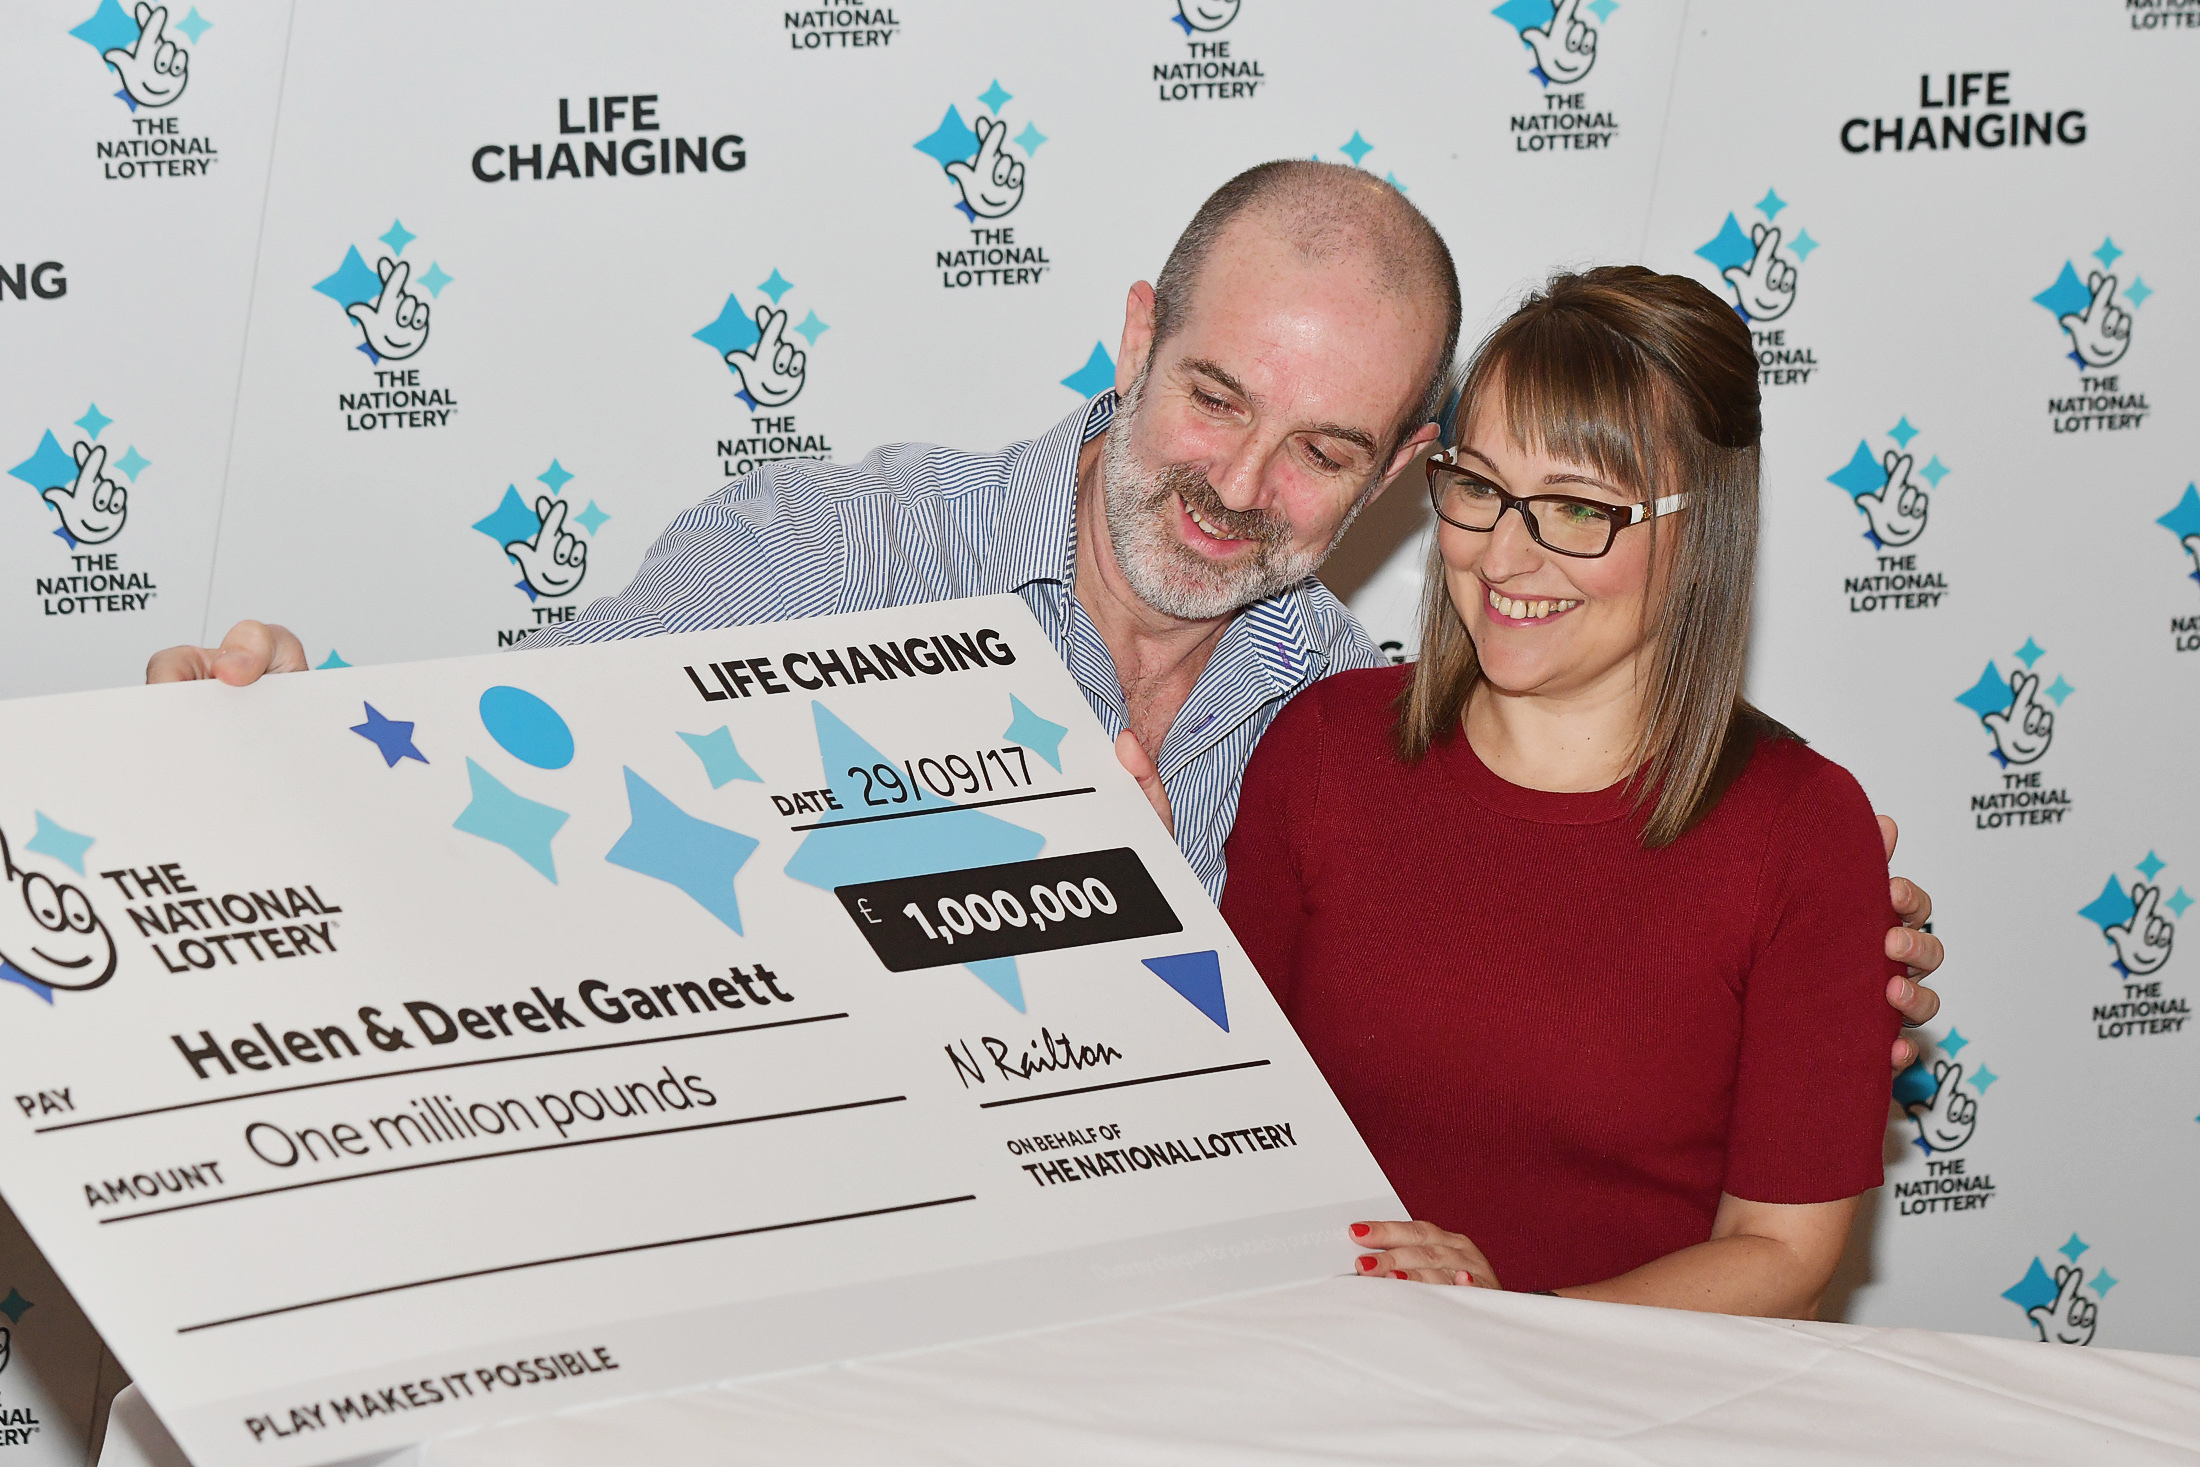 Ulverston Lottery winners Helen and Derek Garnett. Pic for Camelot by Paul Burrows, Manchester, 07768 553530